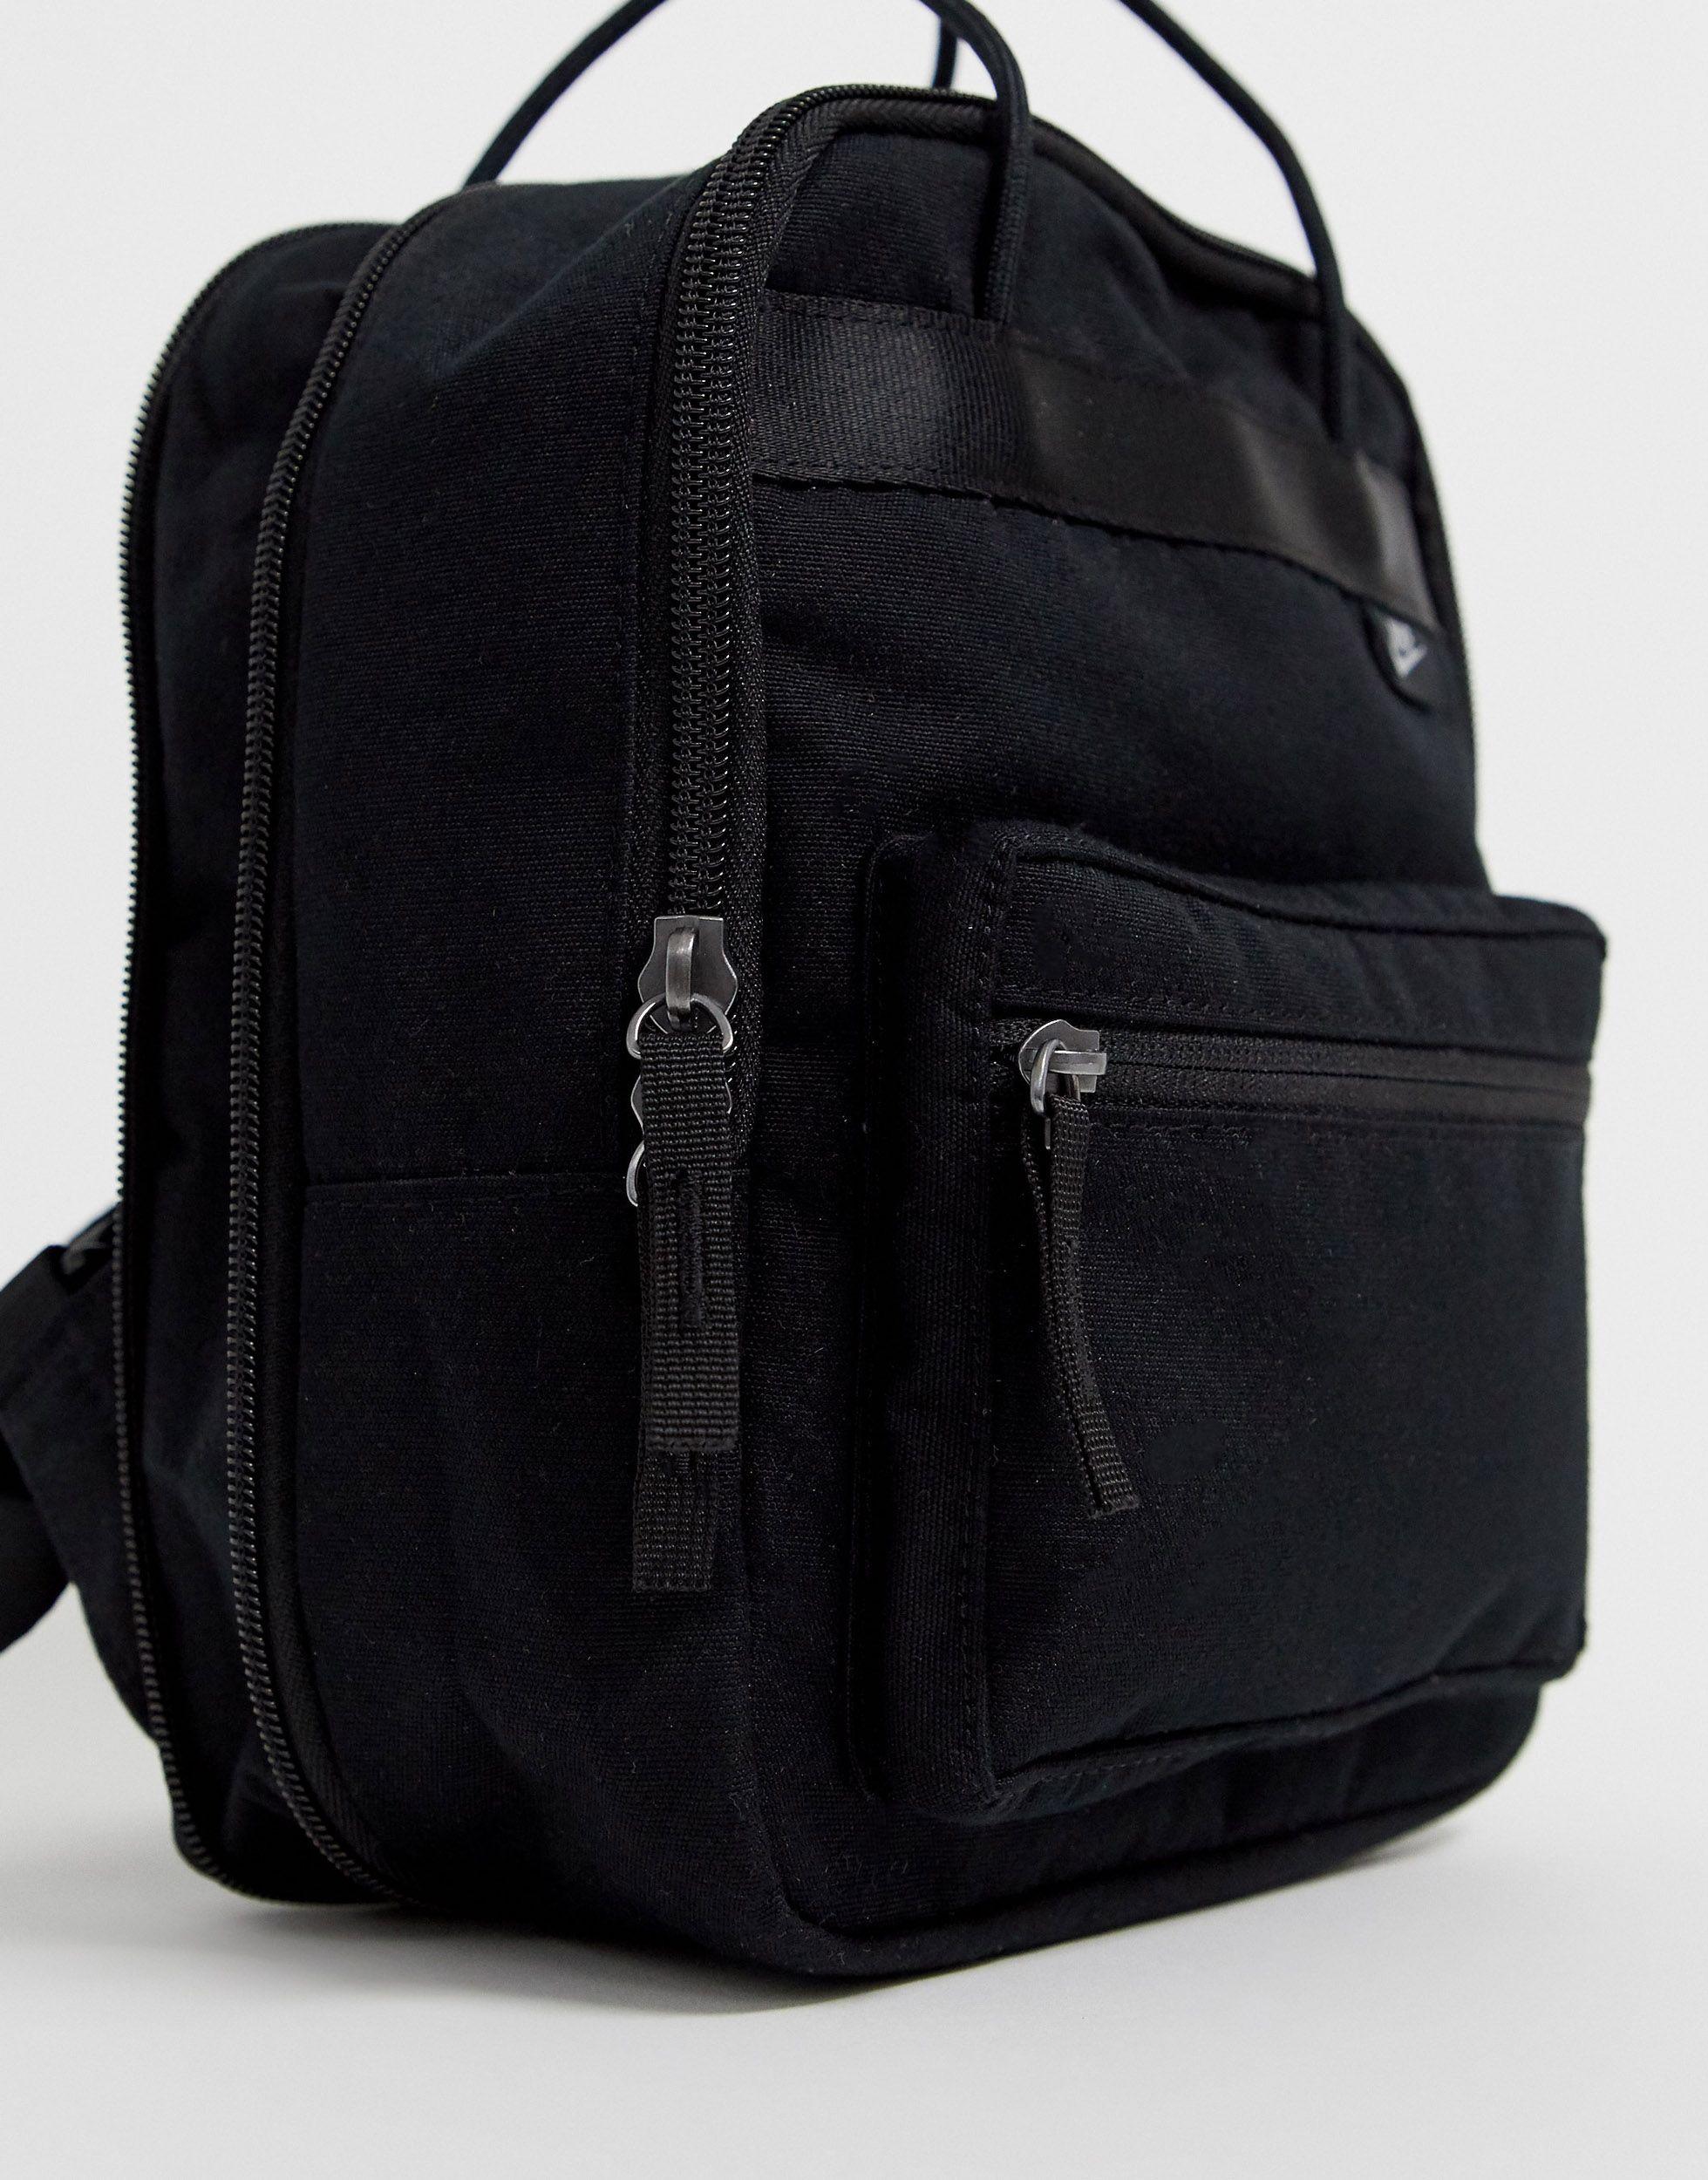 Nike Canvas Tanjun Backpack in Black /Black (Black) | Lyst Australia